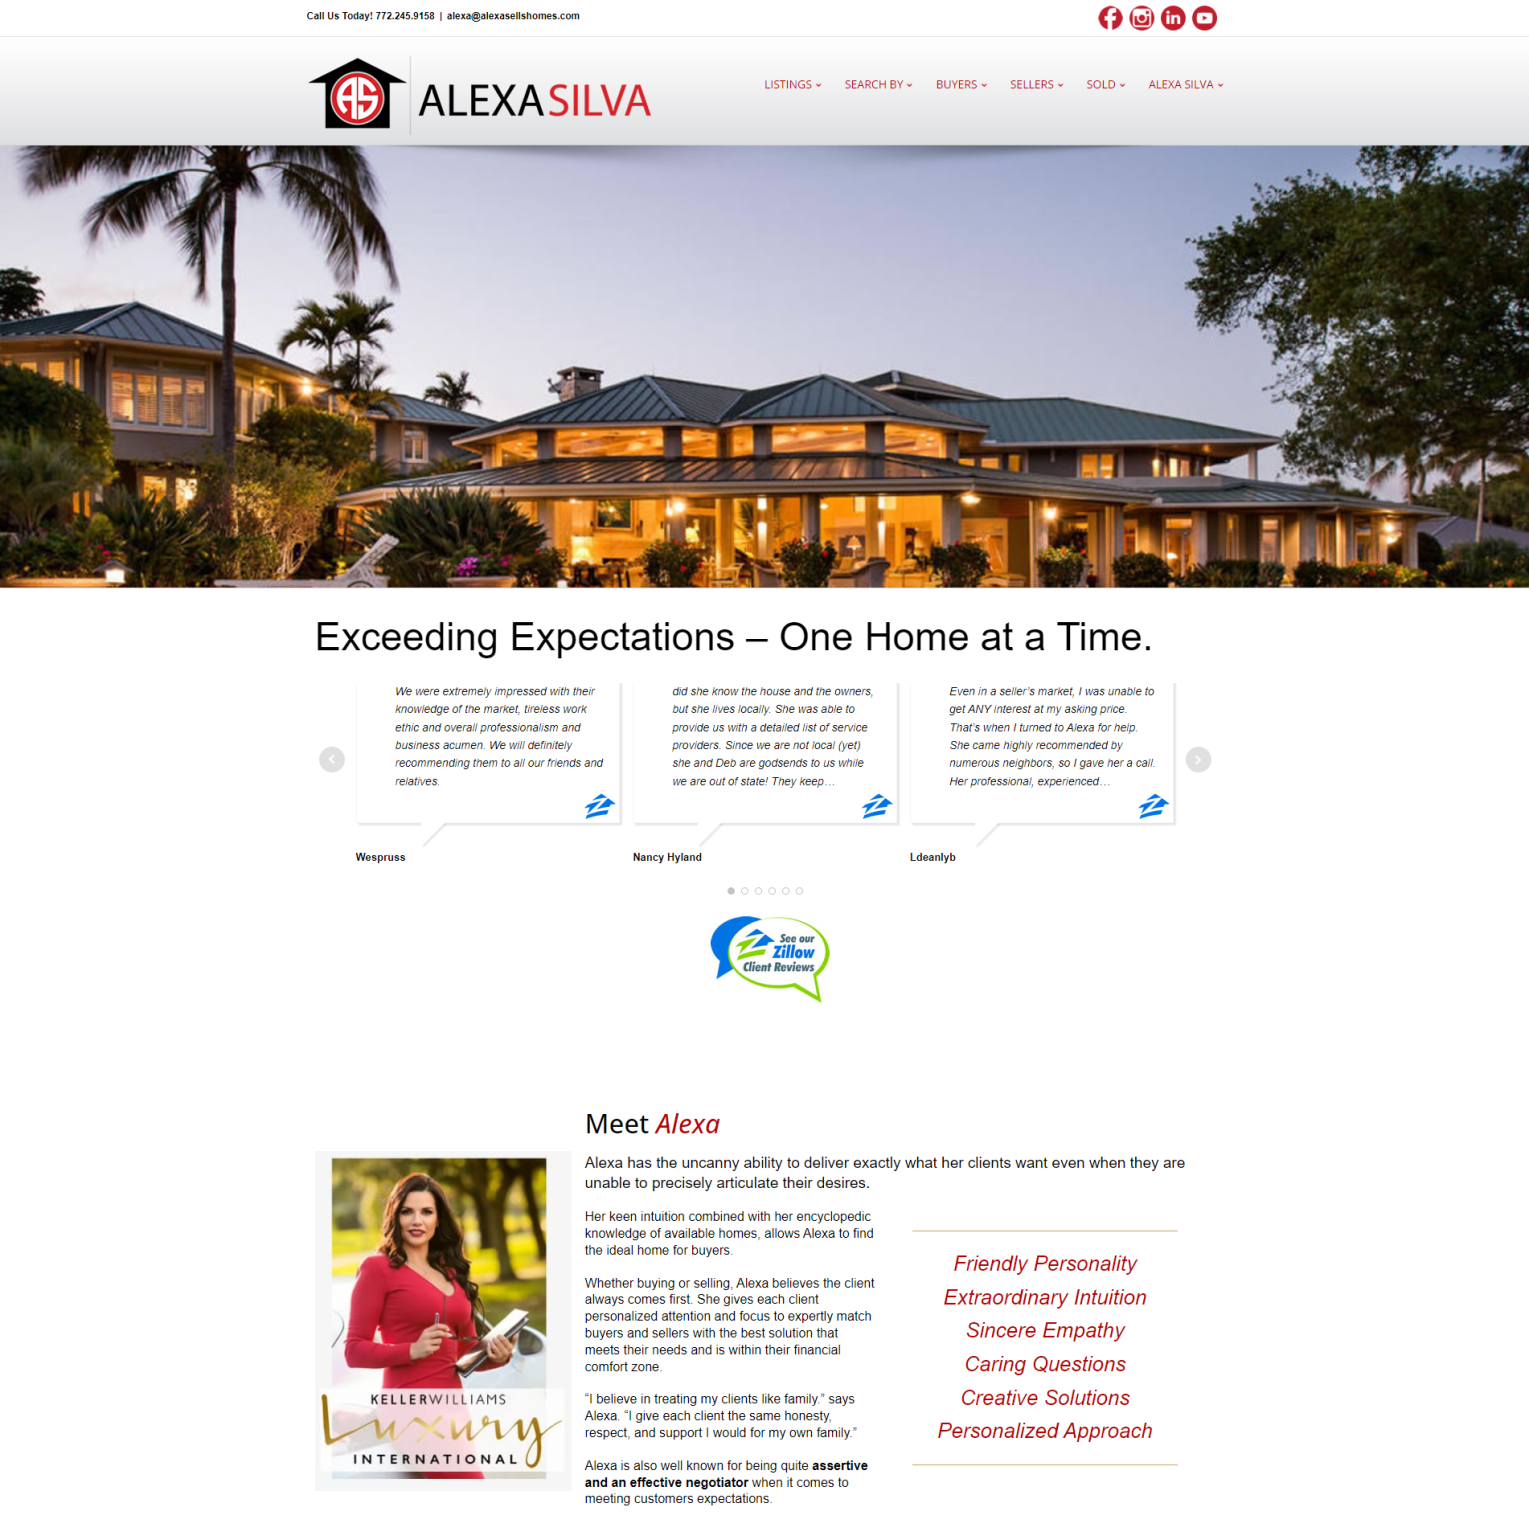 Alexa Sells Homes